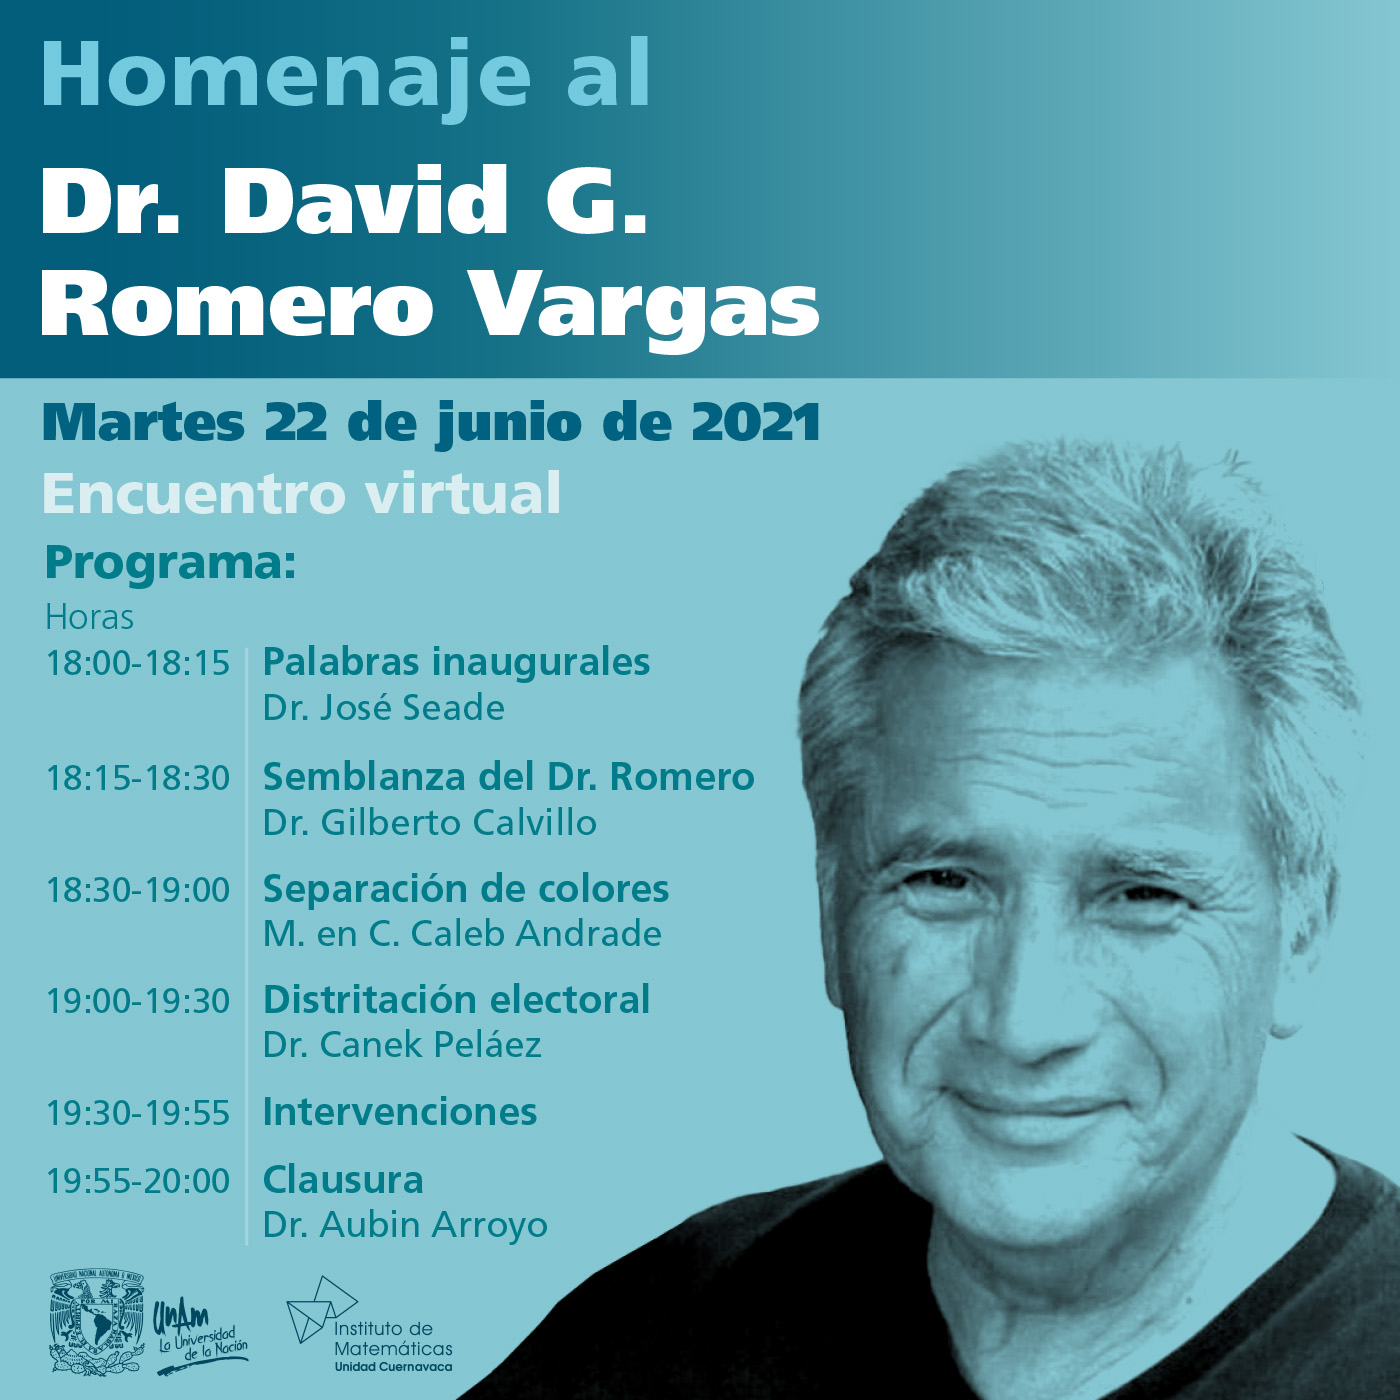 Homenaje al Dr. David G. Romero Vargas